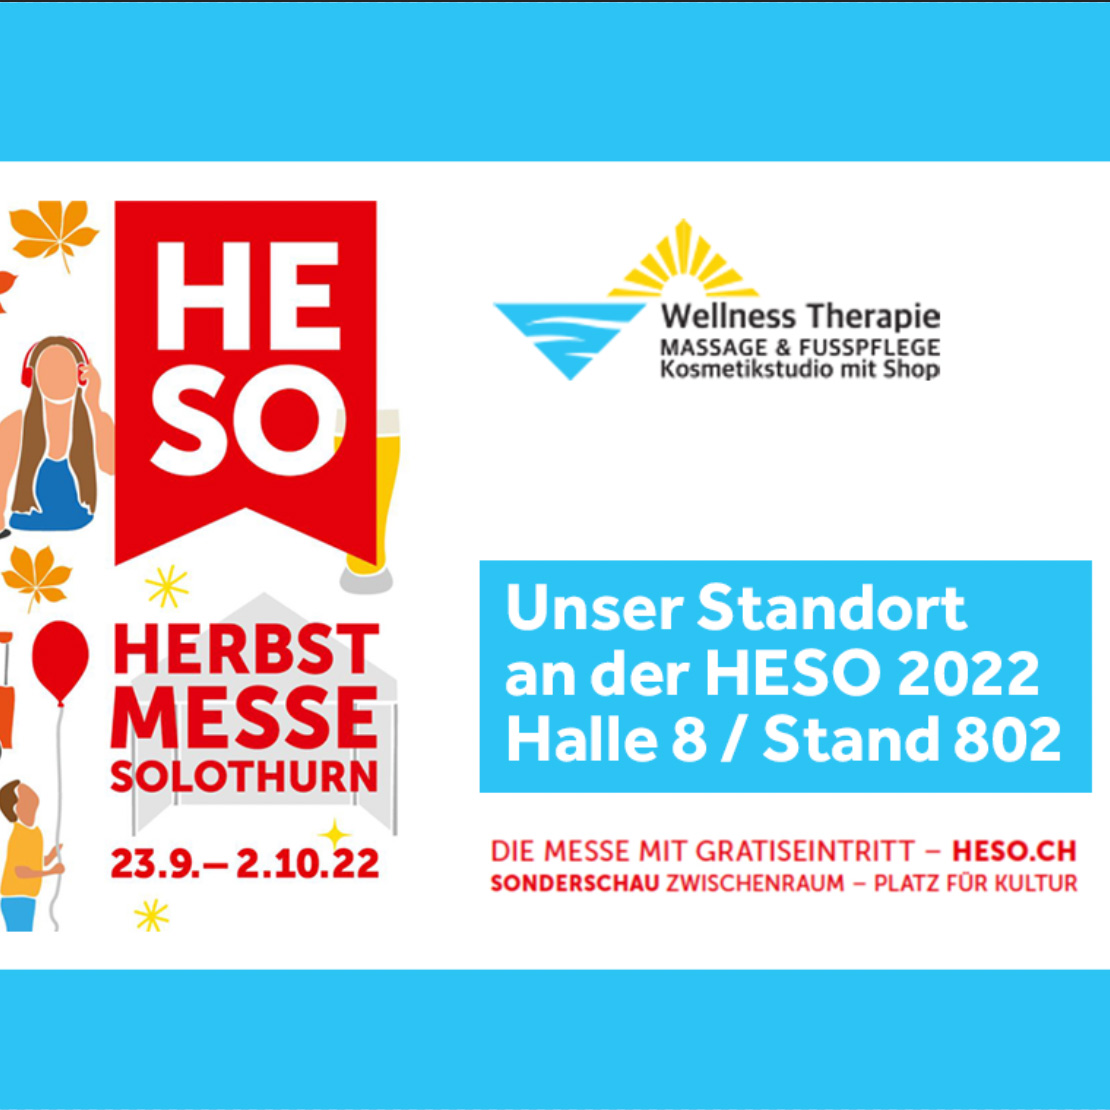 HESO | Herbstmesse Solothurn Unser Standort Halle 8 / Stand 802